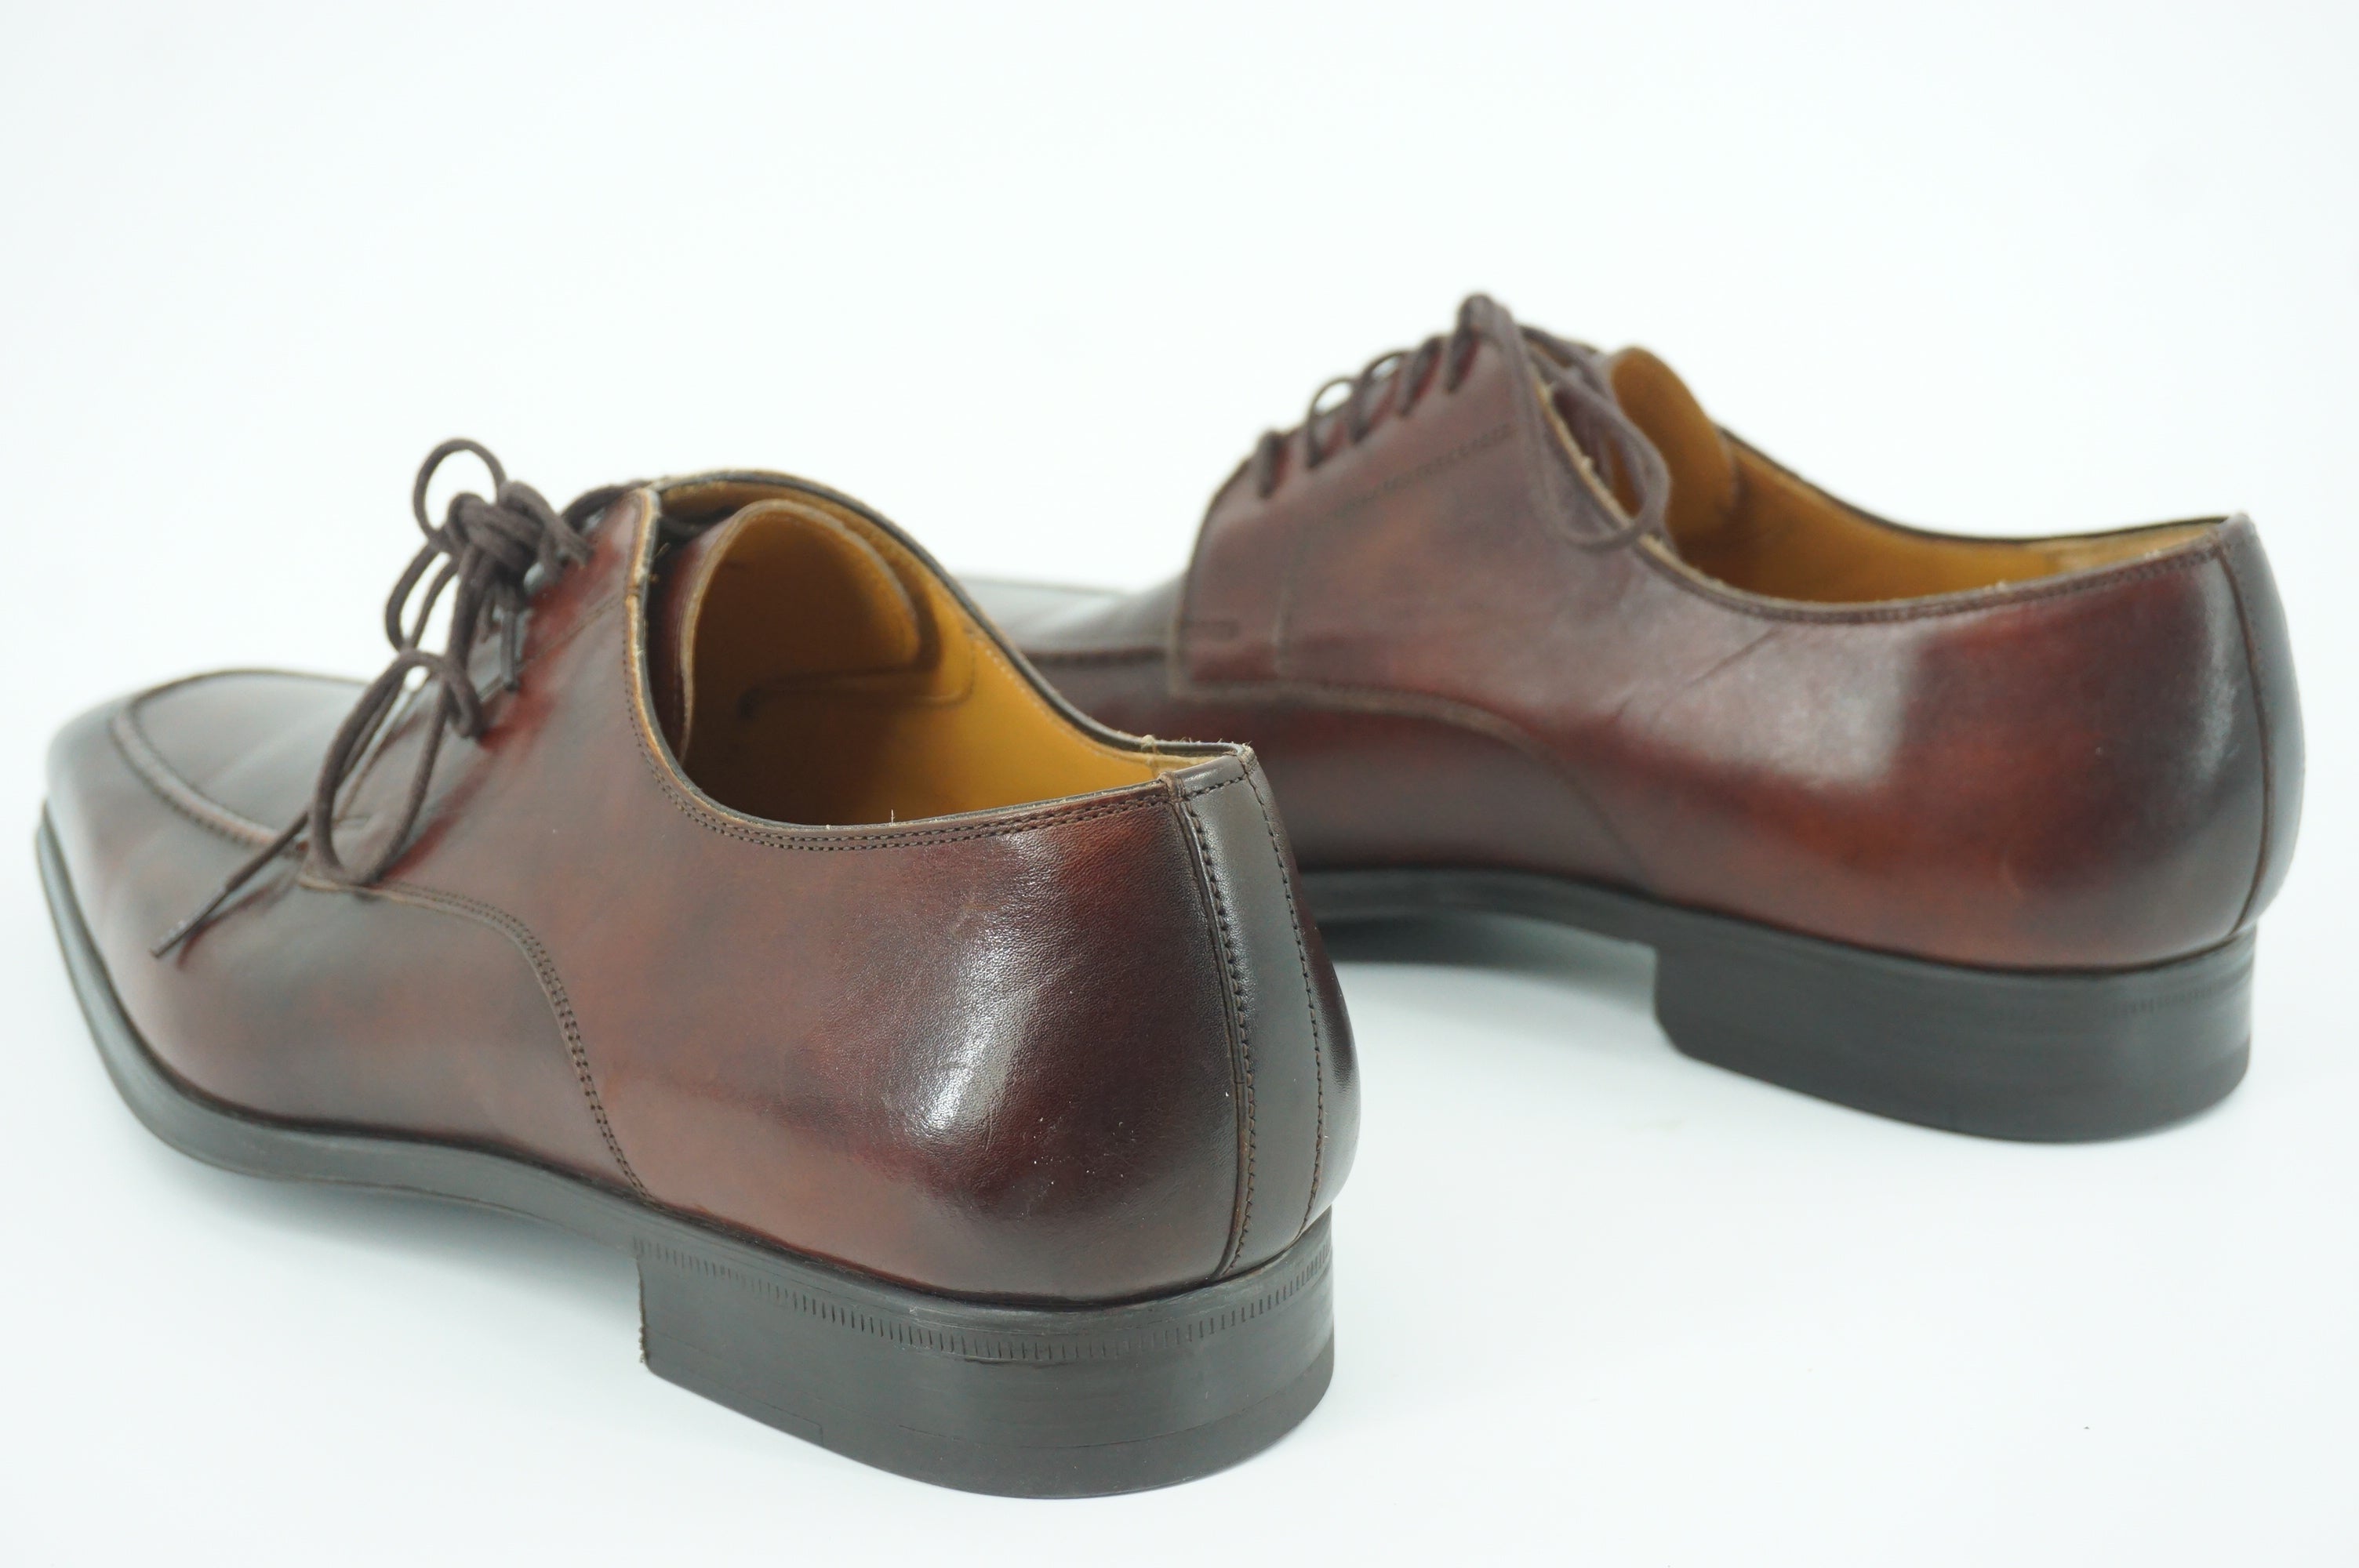 Magnanni Waro Apron Toe Oxford Derby Dress Shoes Size 8 Brown $395